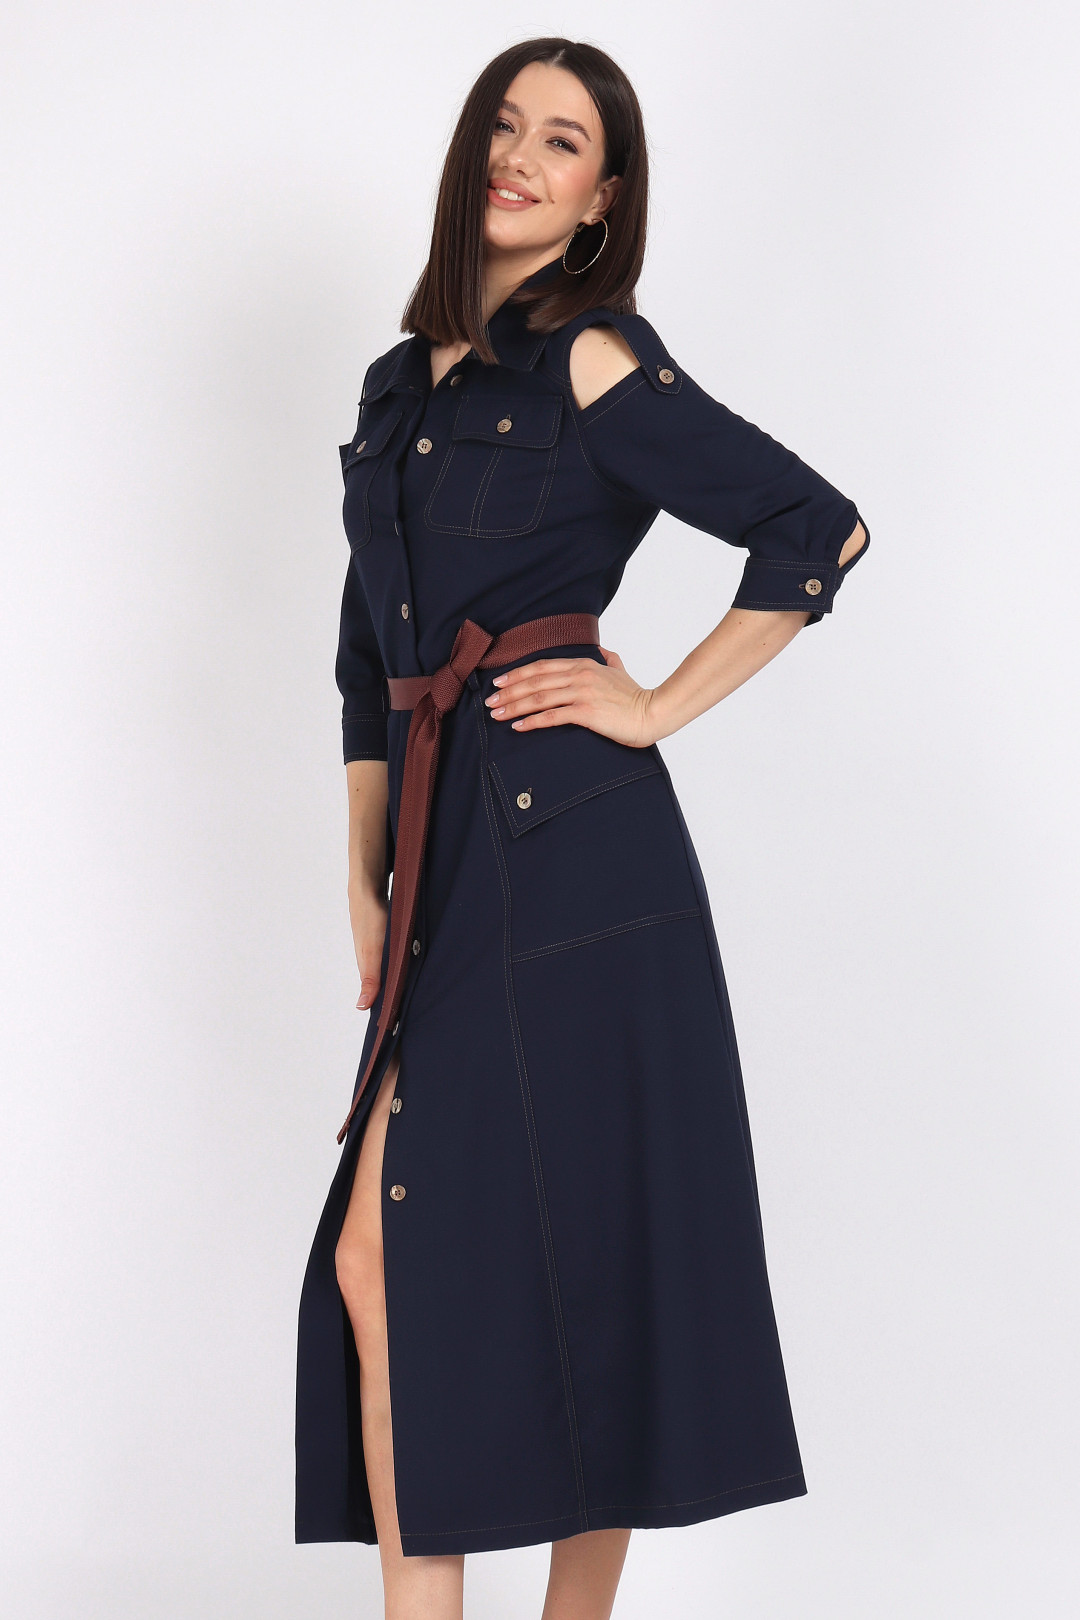 Платье МиА-Мода 1551 темно-синий